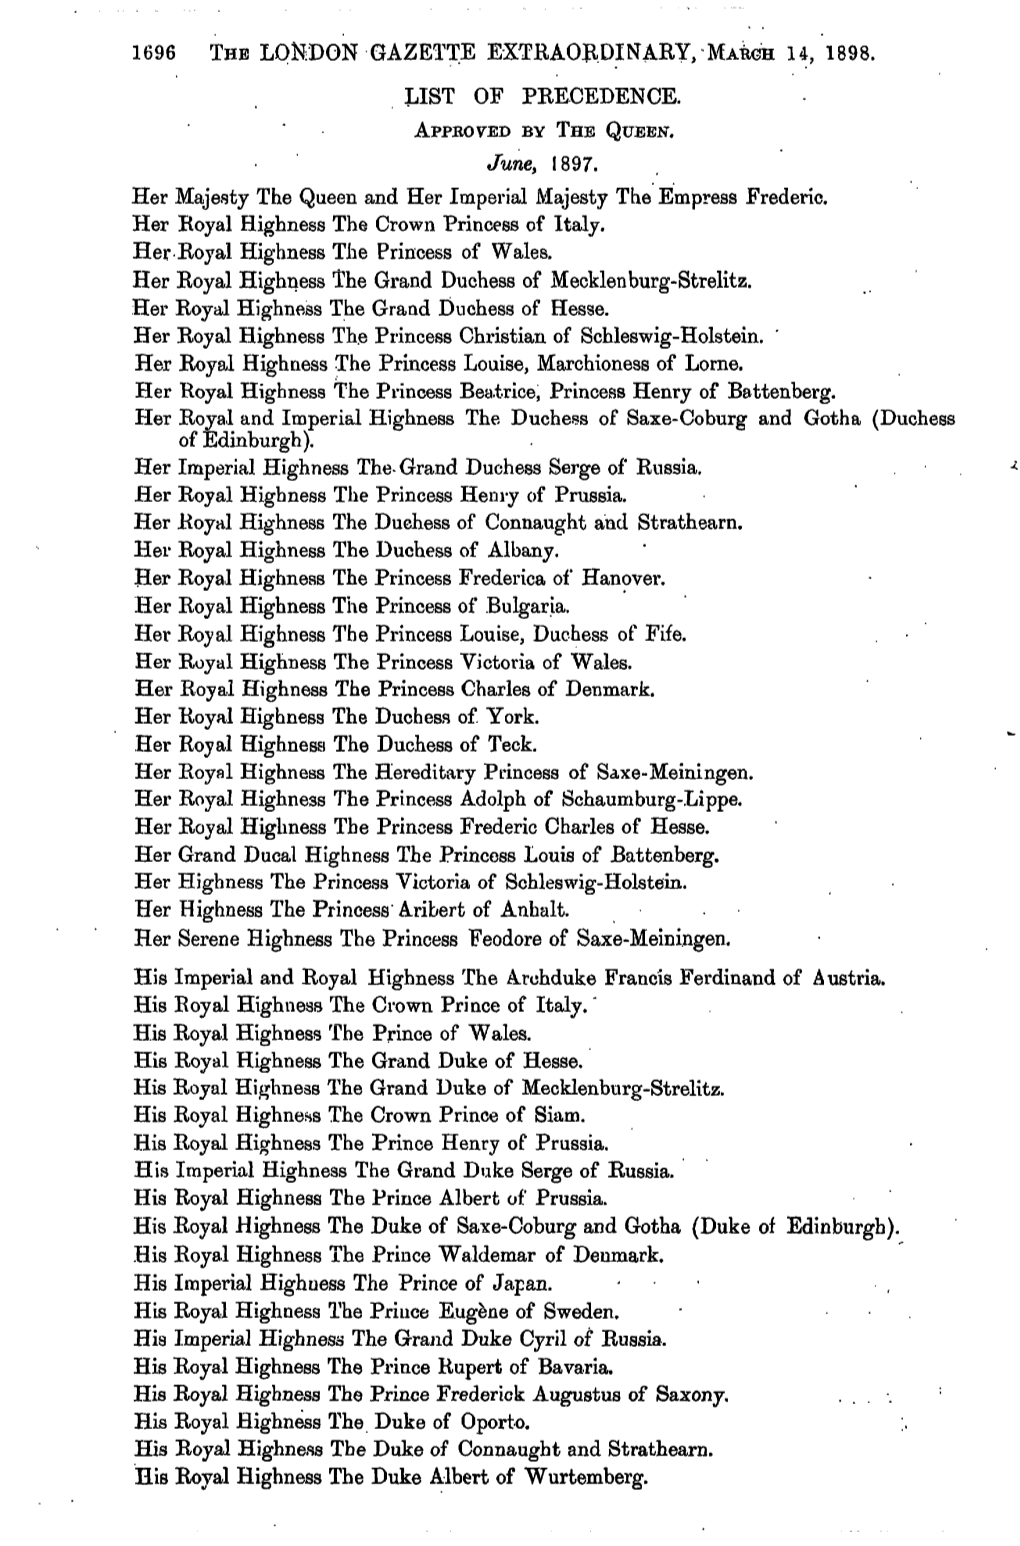 1696 the London-Gazette Extraordinary, March 14, 1898. List of Precedence